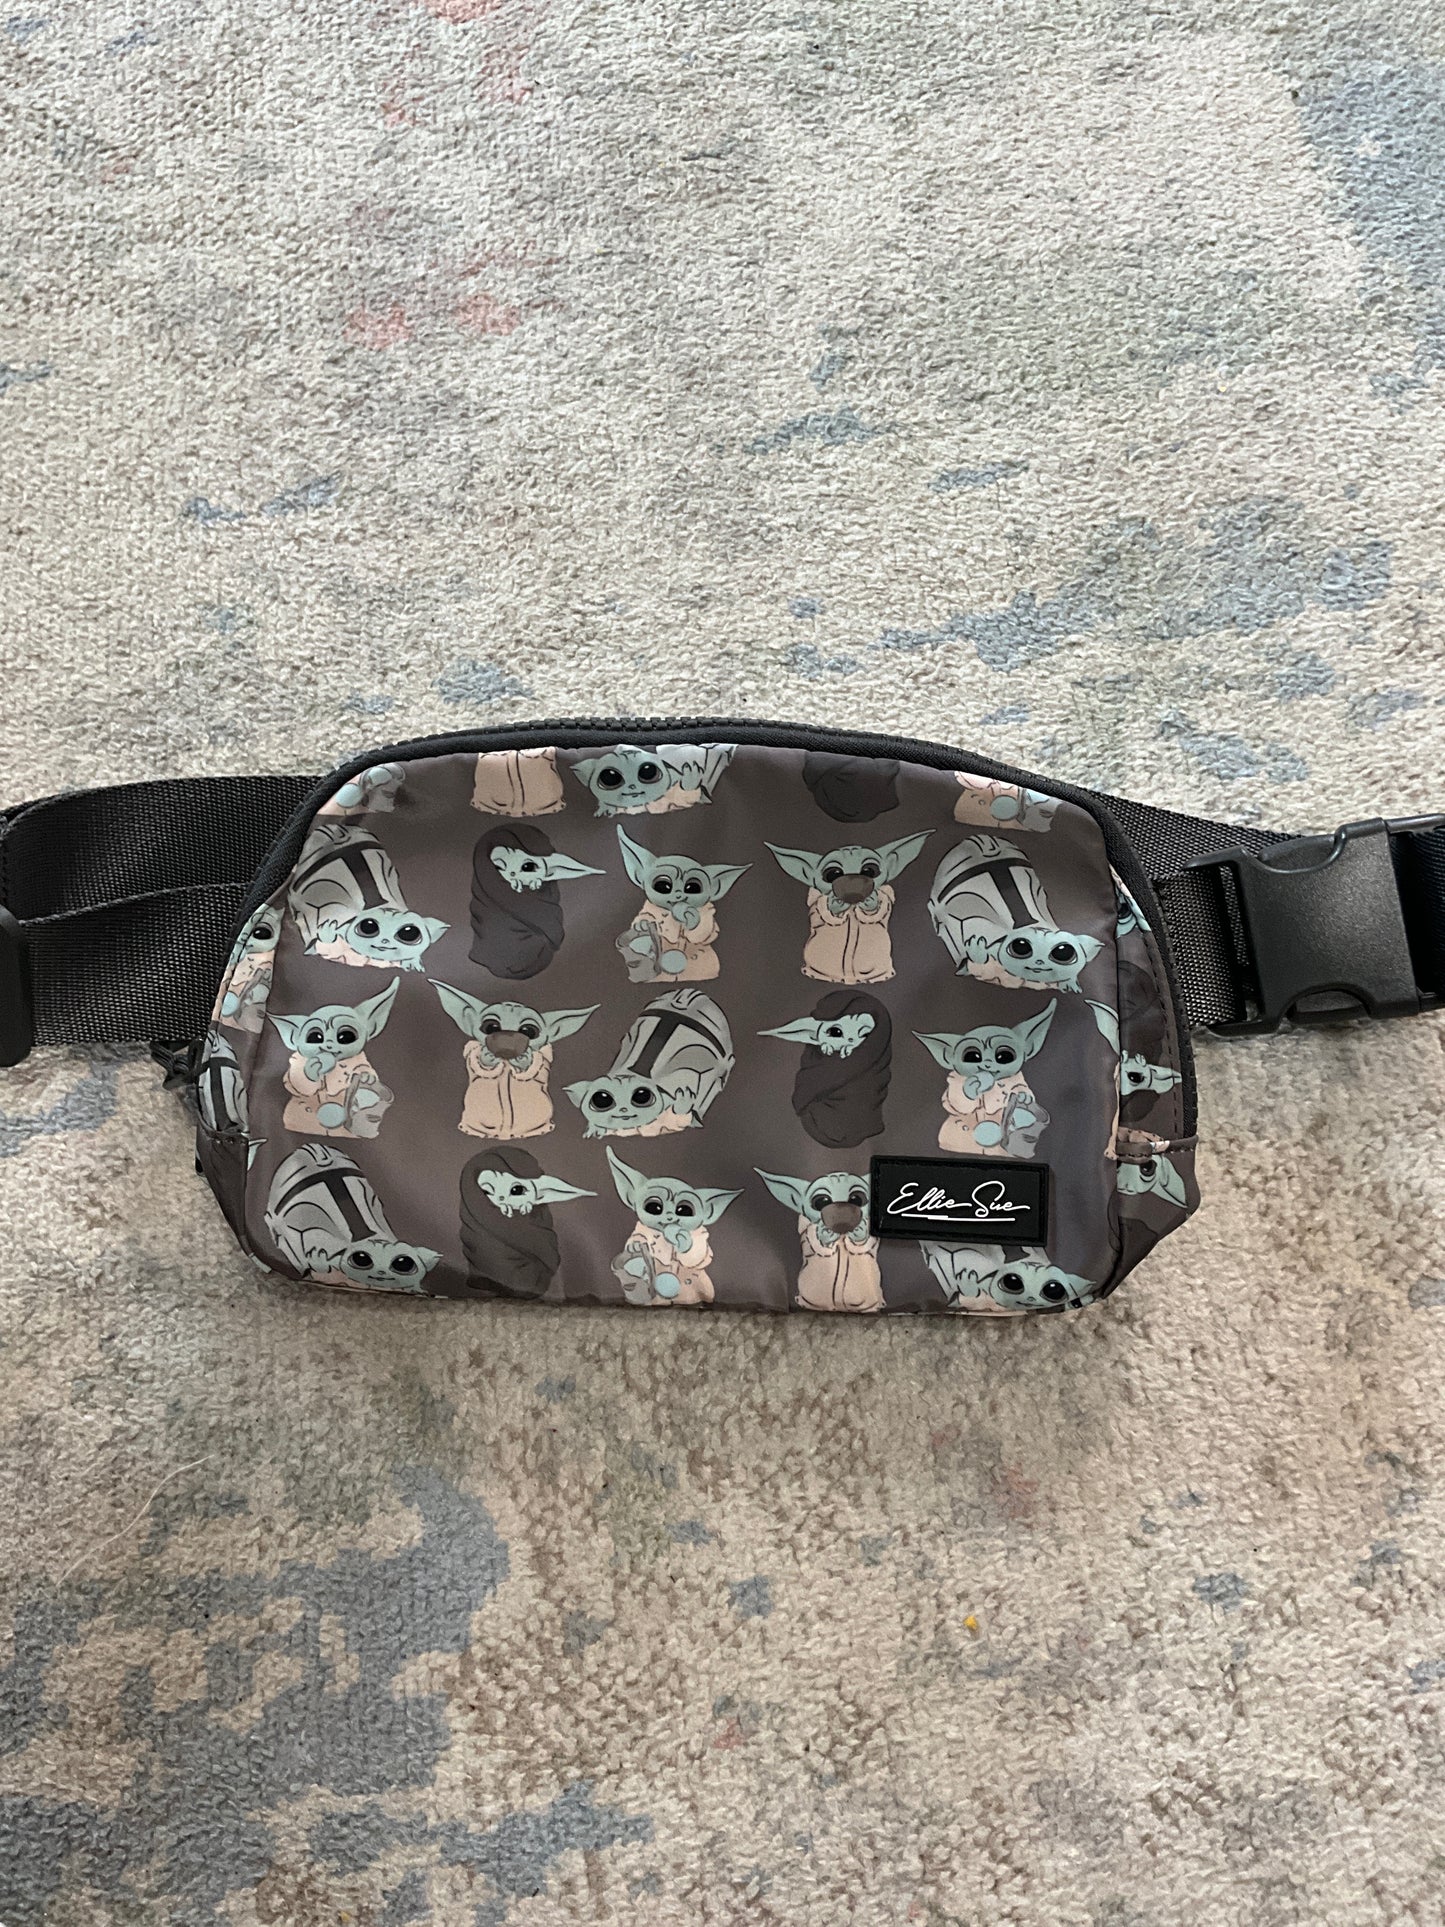 Rts- Baby Yoda belt bag